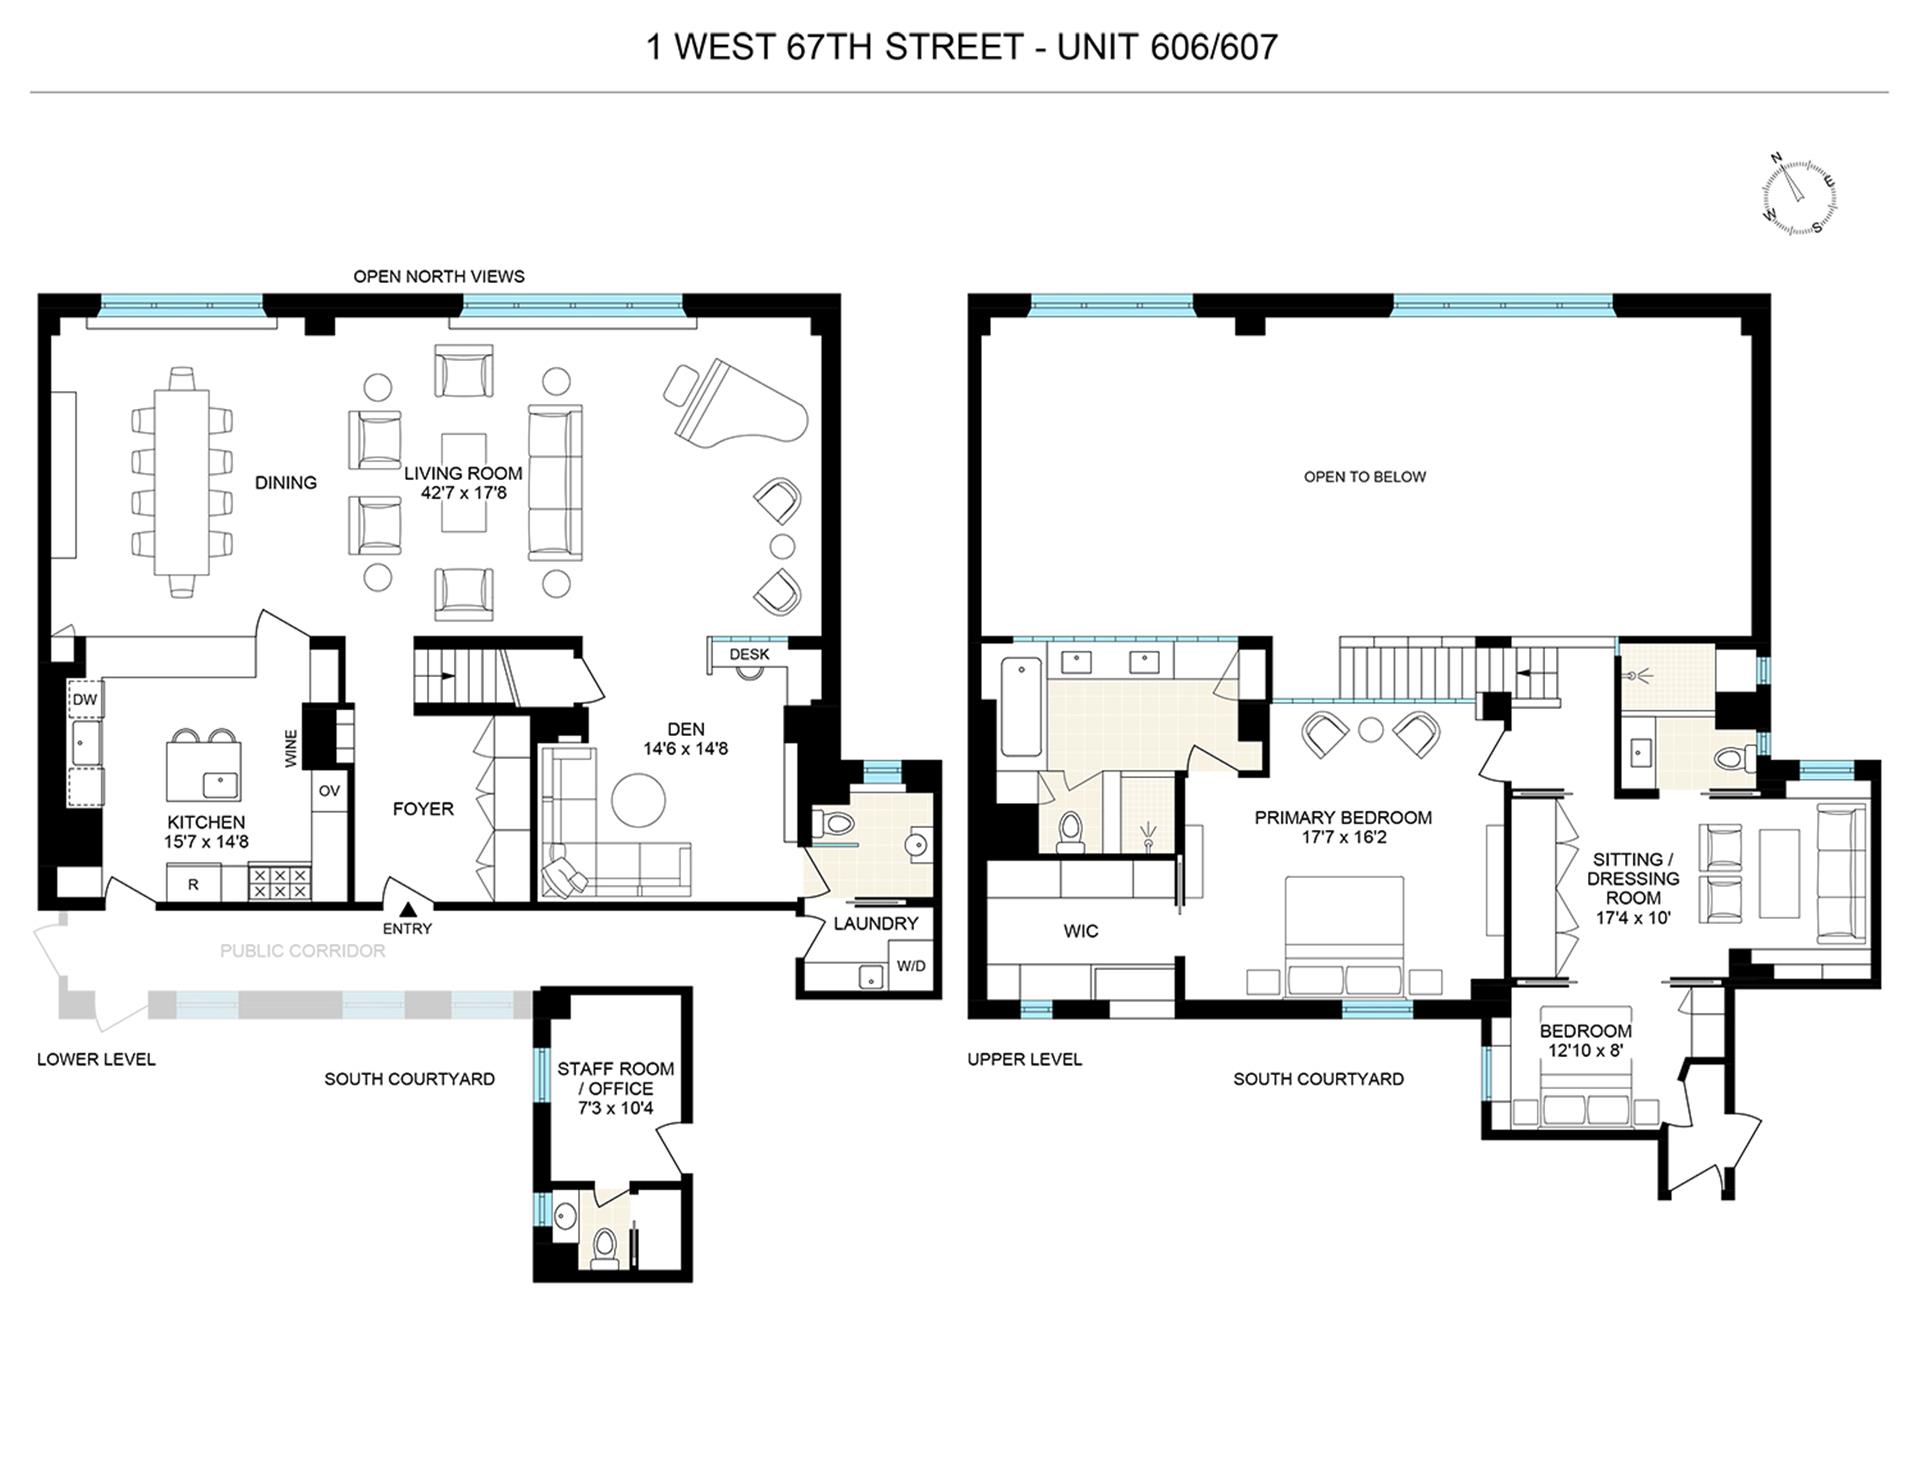 Floorplan for 1 West 67th Street, 606/607